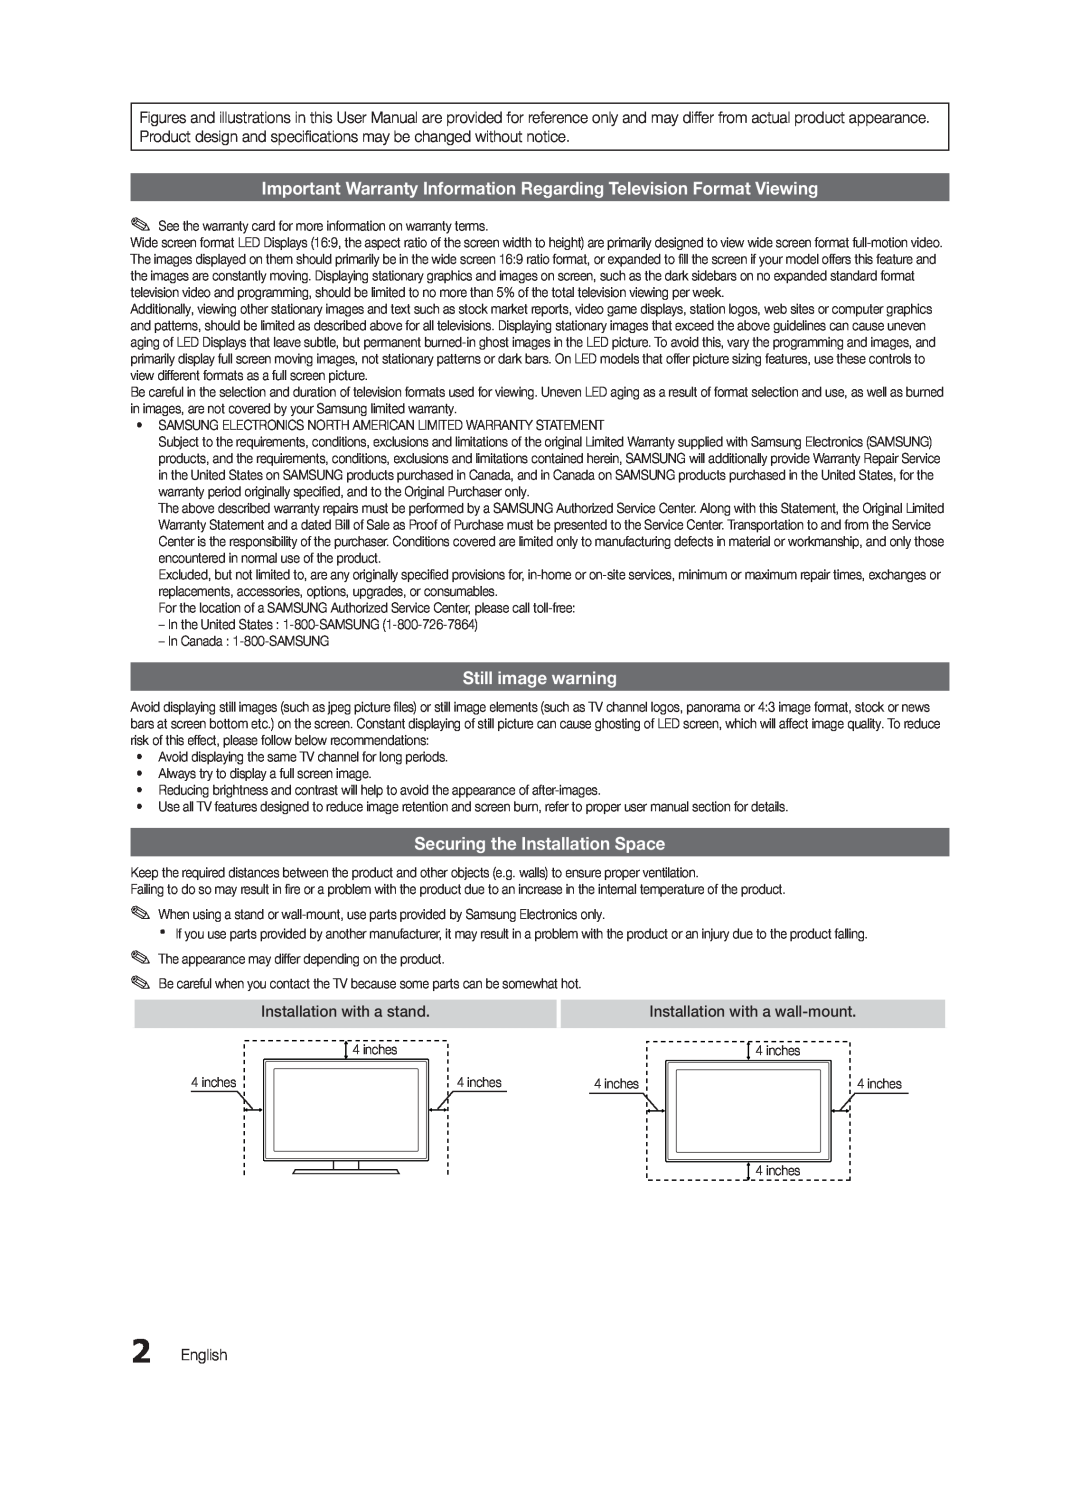 Samsung 6800 user manual Important Warranty Information Regarding Television Format Viewing, Still image warning, English 